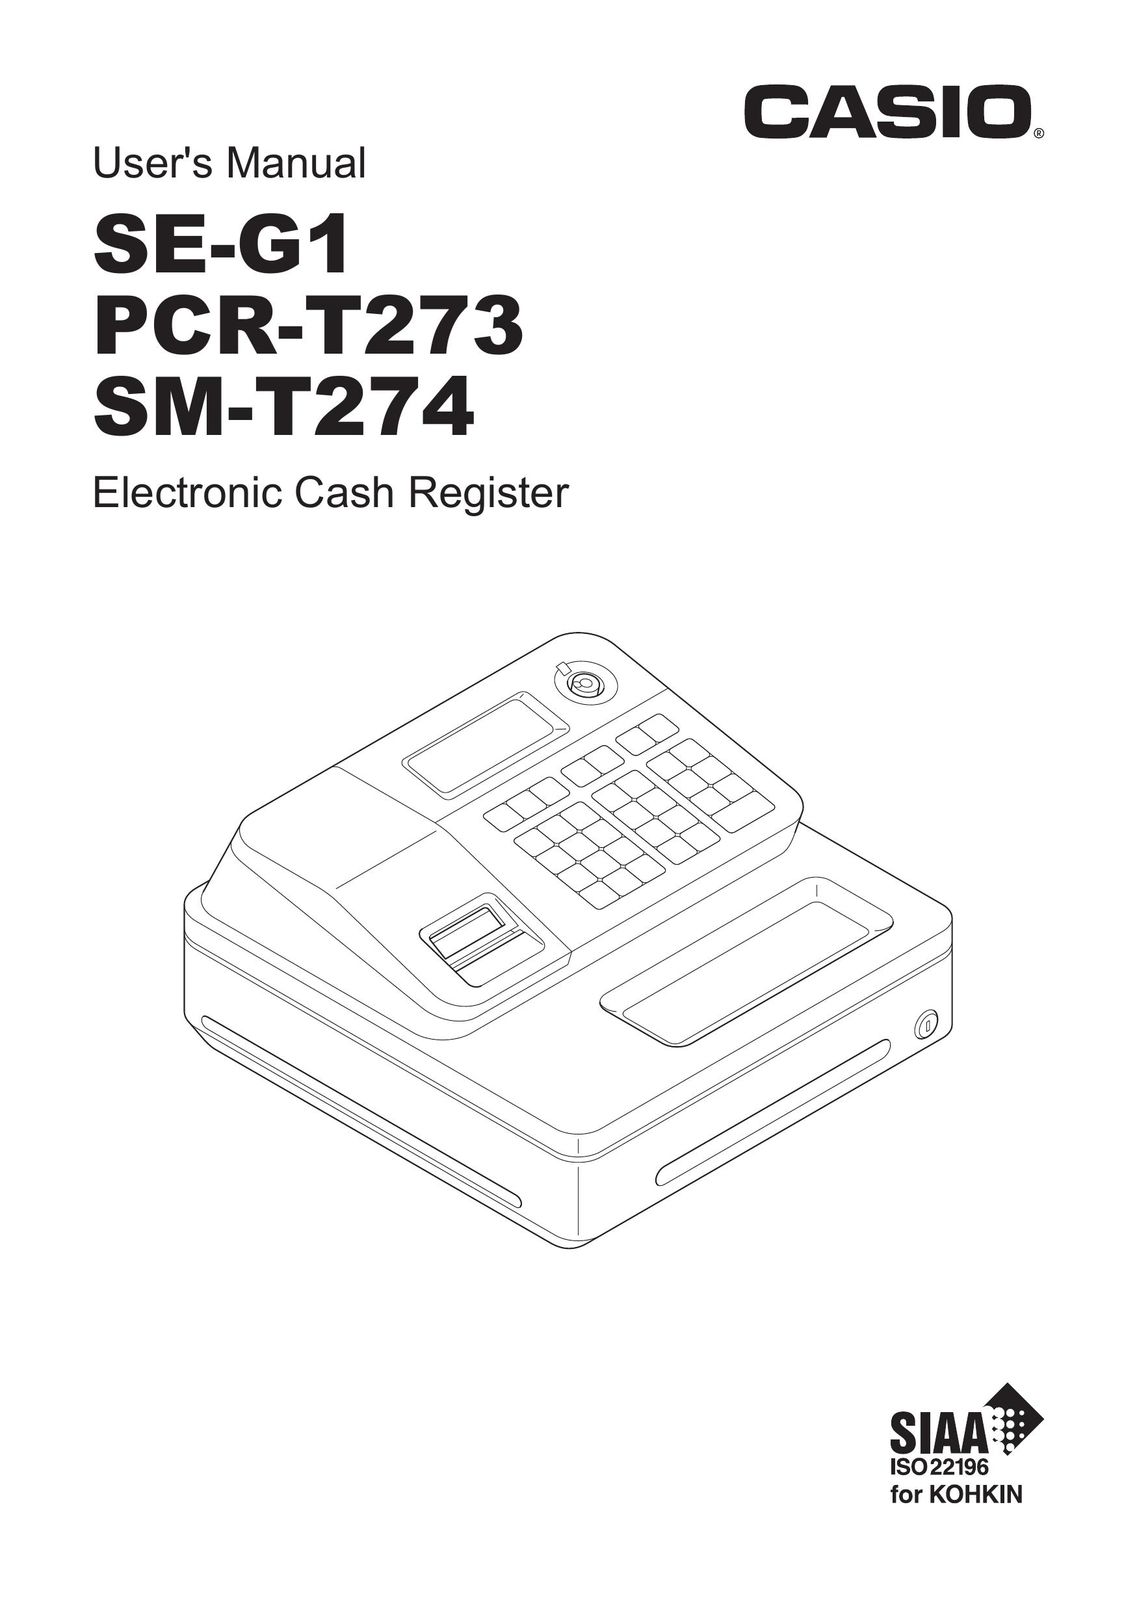 Casio SE-G1 Cash Register User Manual